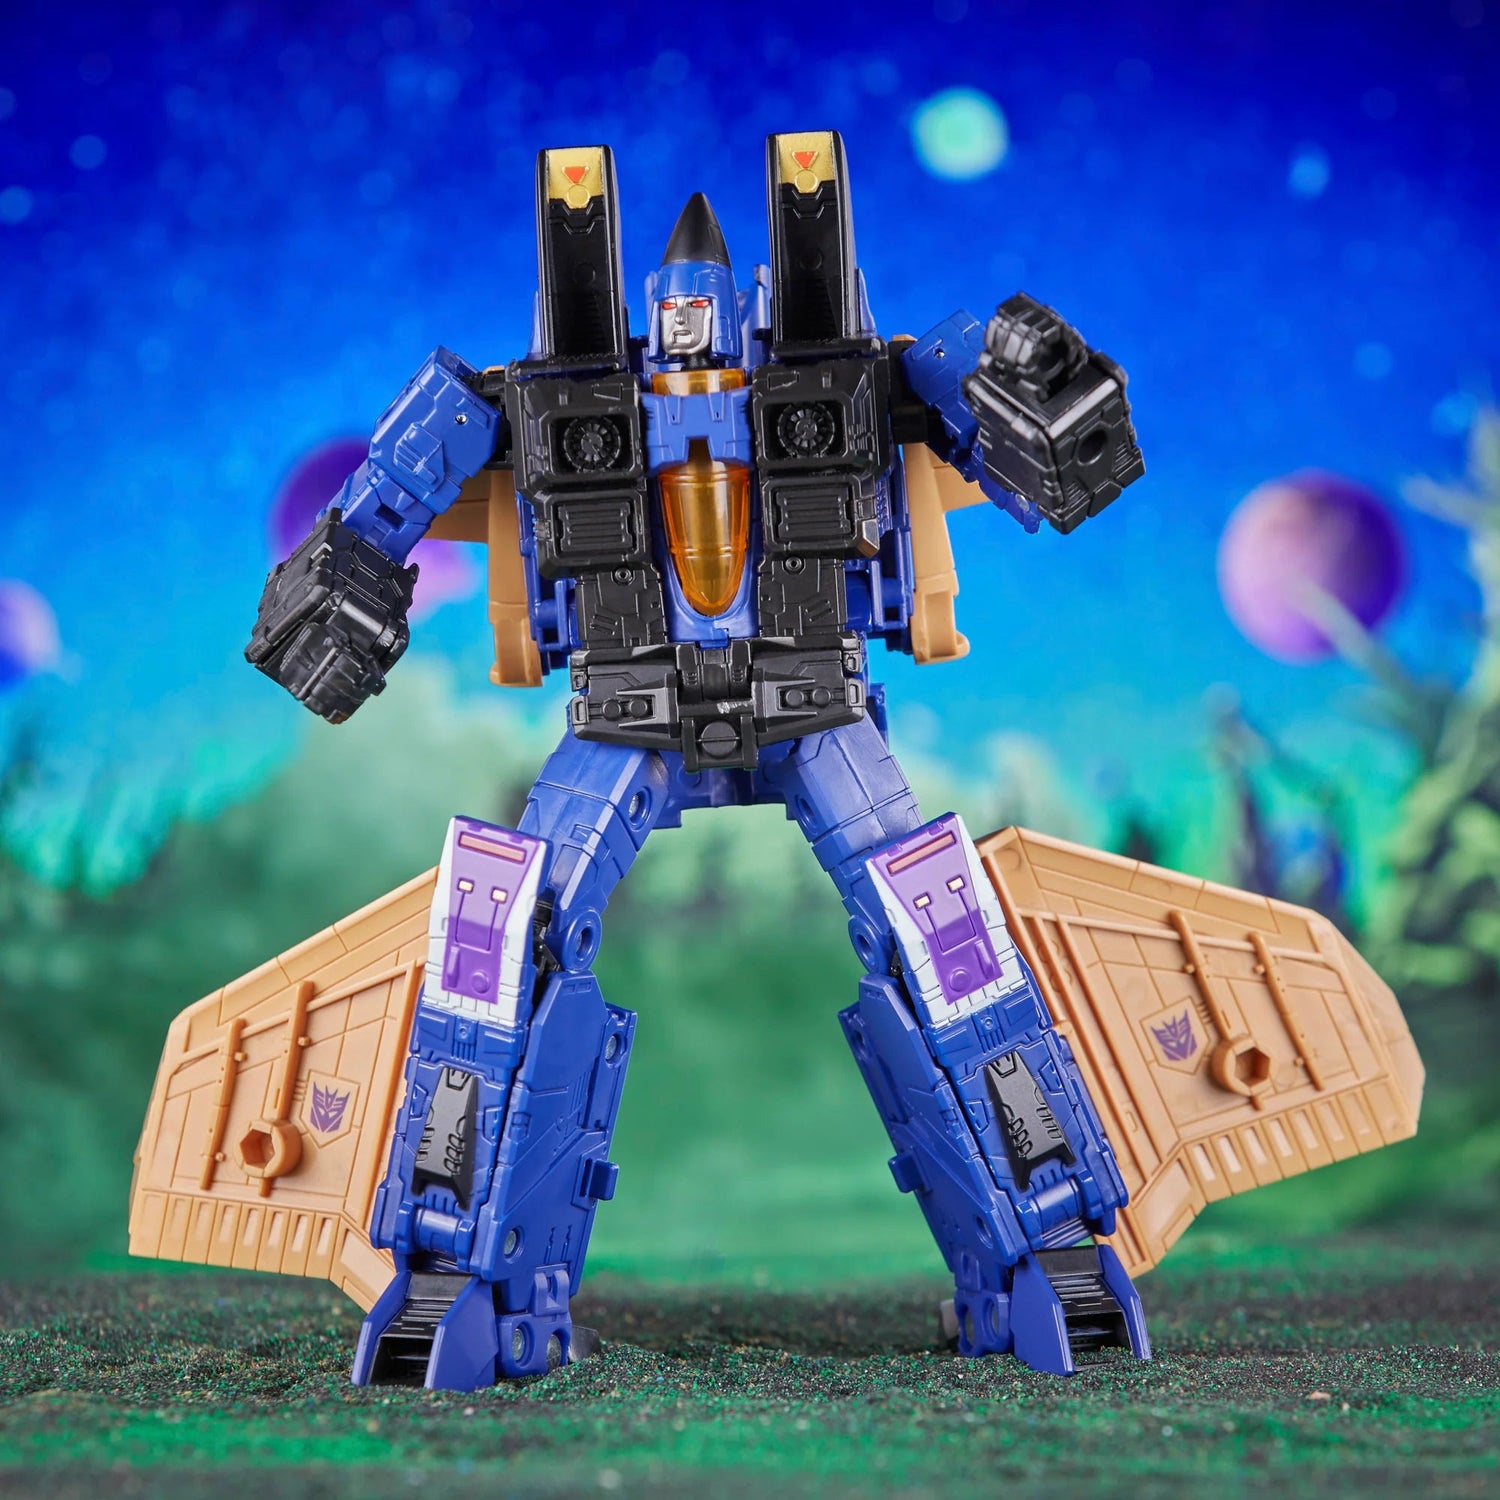 Transformers Generations Legacy Evolution Voyager Dirge Hasbro